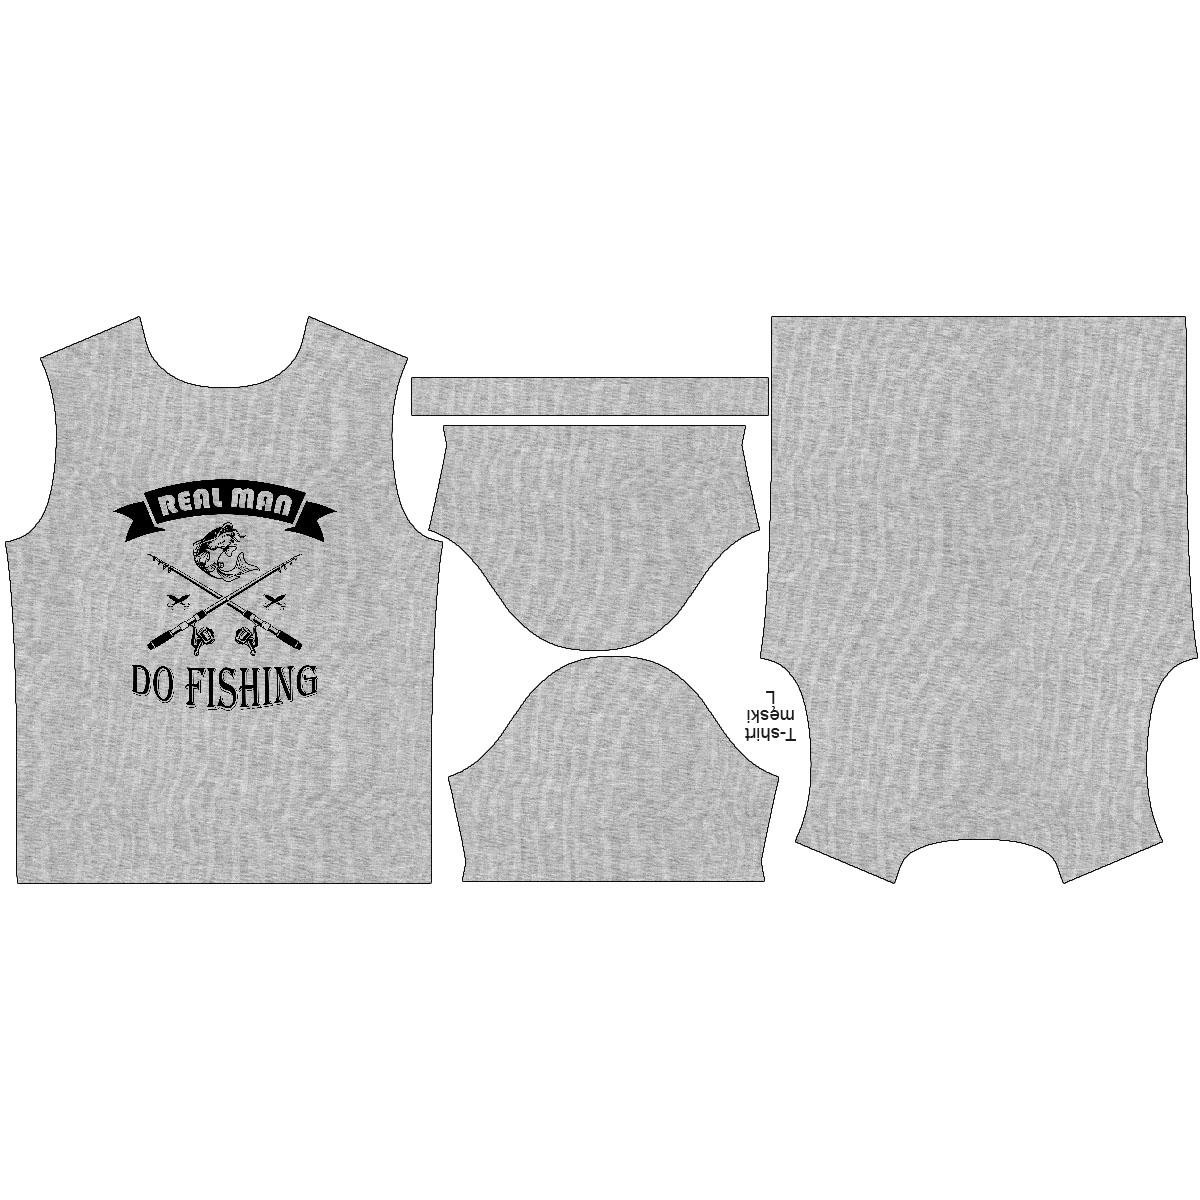 MEN’S T-SHIRT - DO FISHING / melange light grey - single jersey